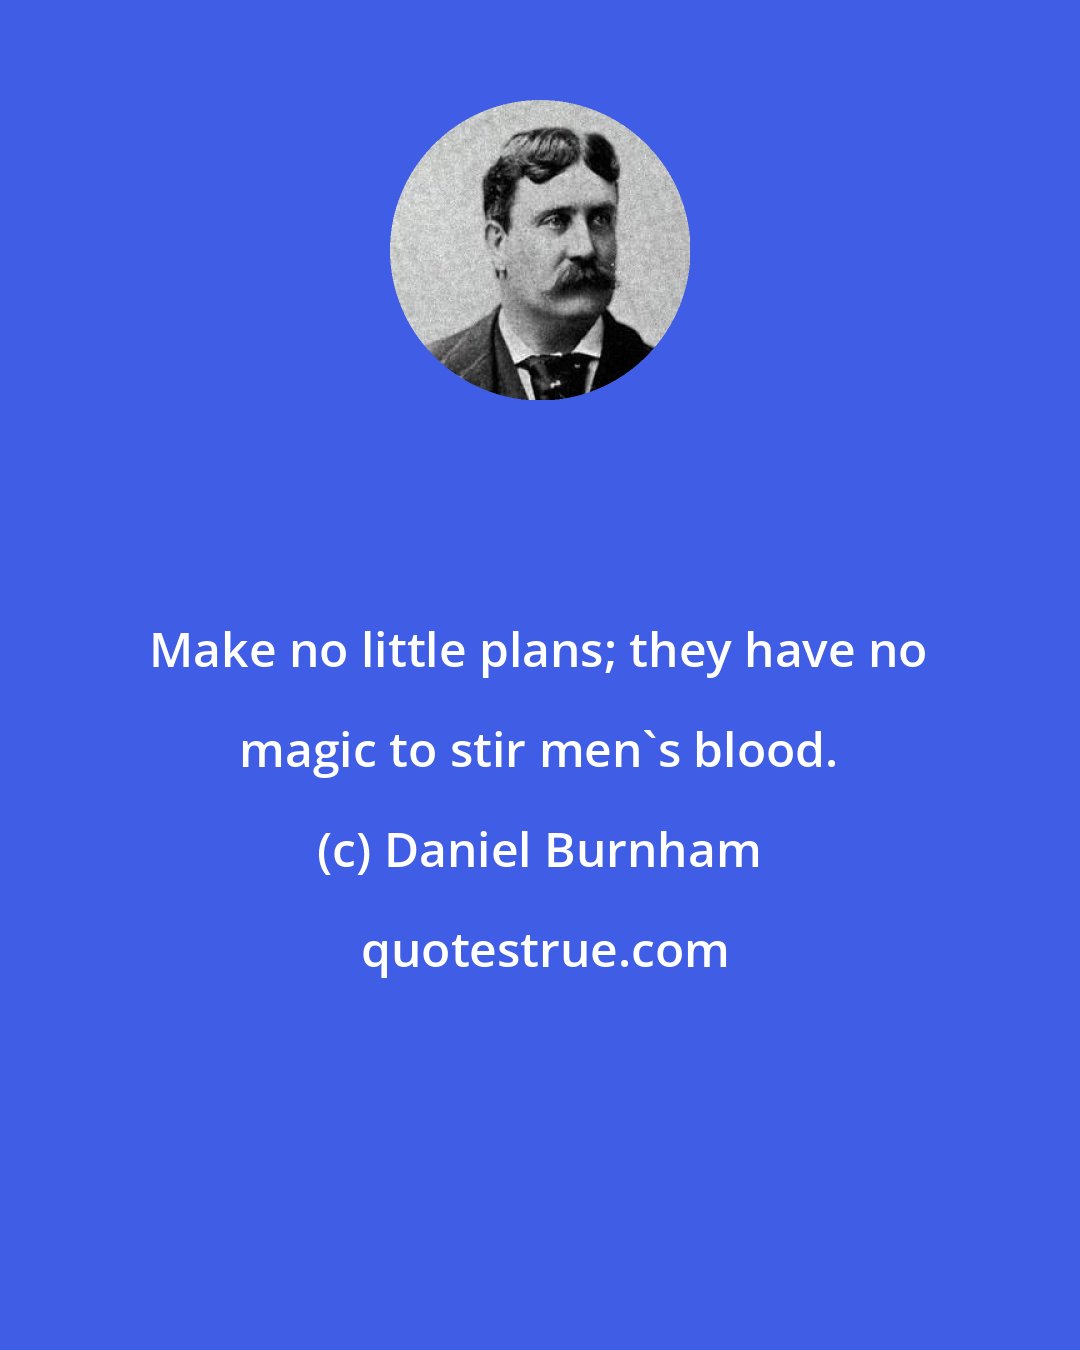 Daniel Burnham: Make no little plans; they have no magic to stir men's blood.